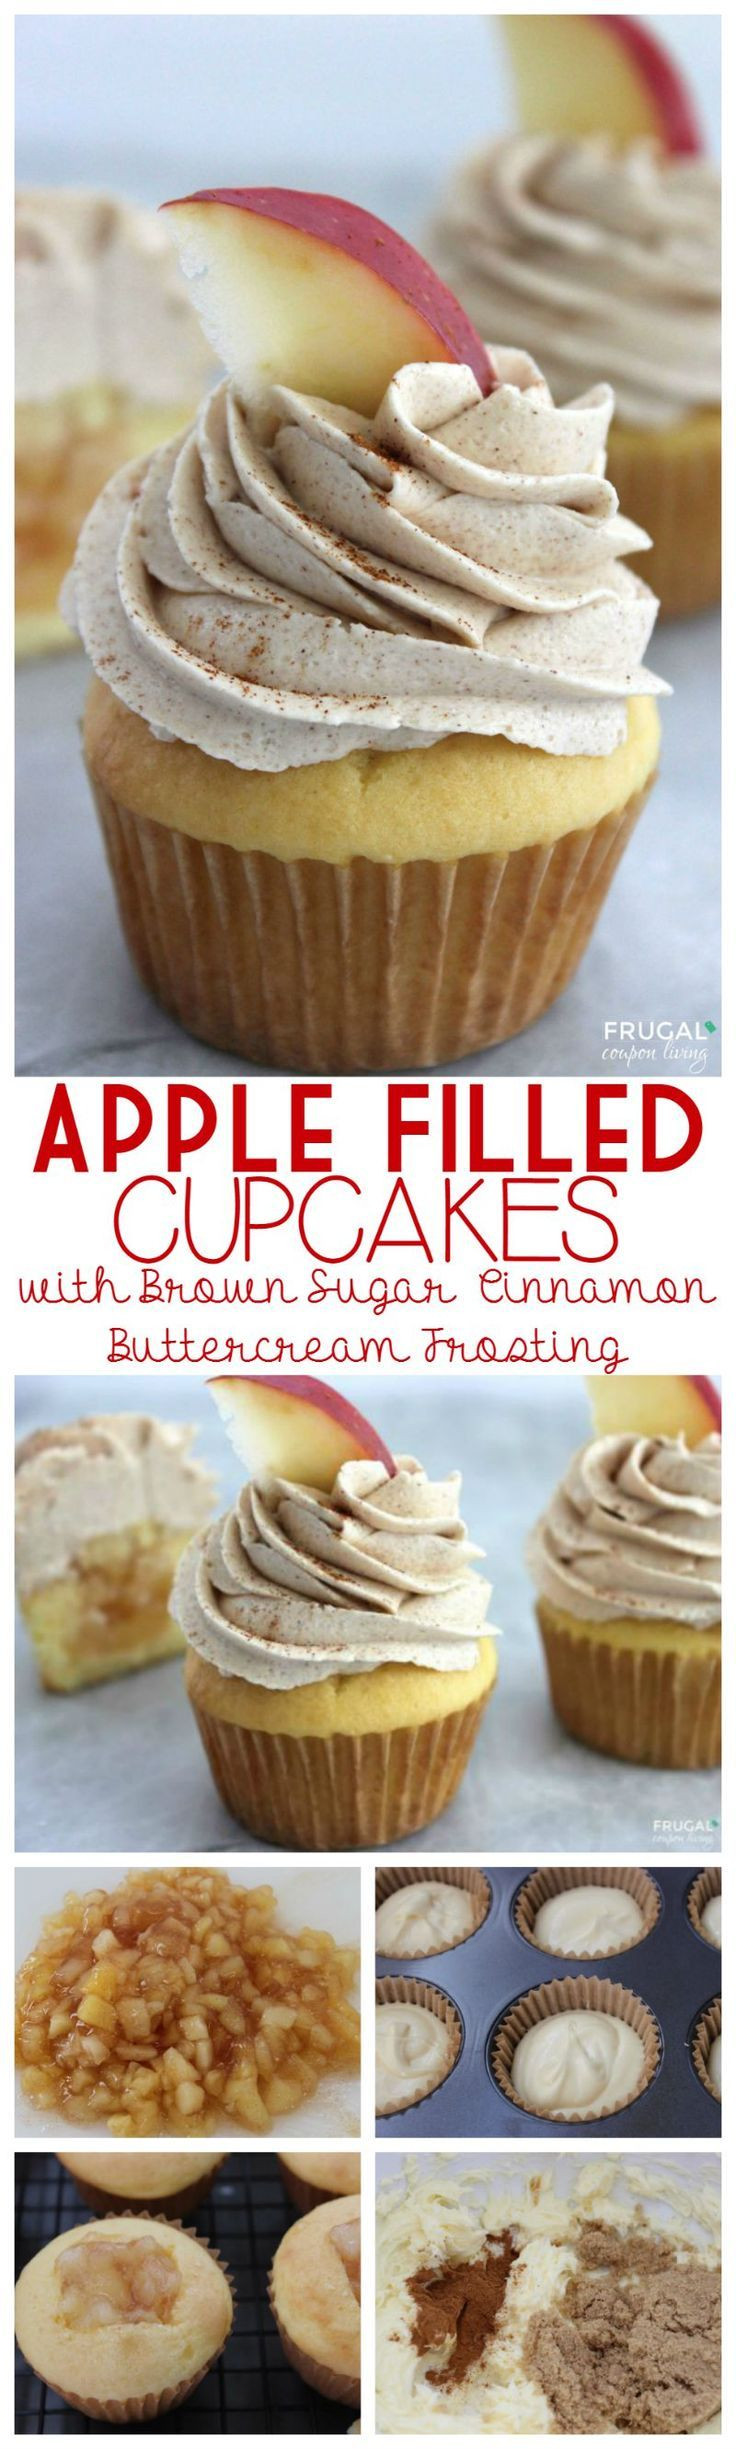 25 Fabulous Autumn Fall Cupcakes
 Best 25 Fall Cakes ideas on Pinterest